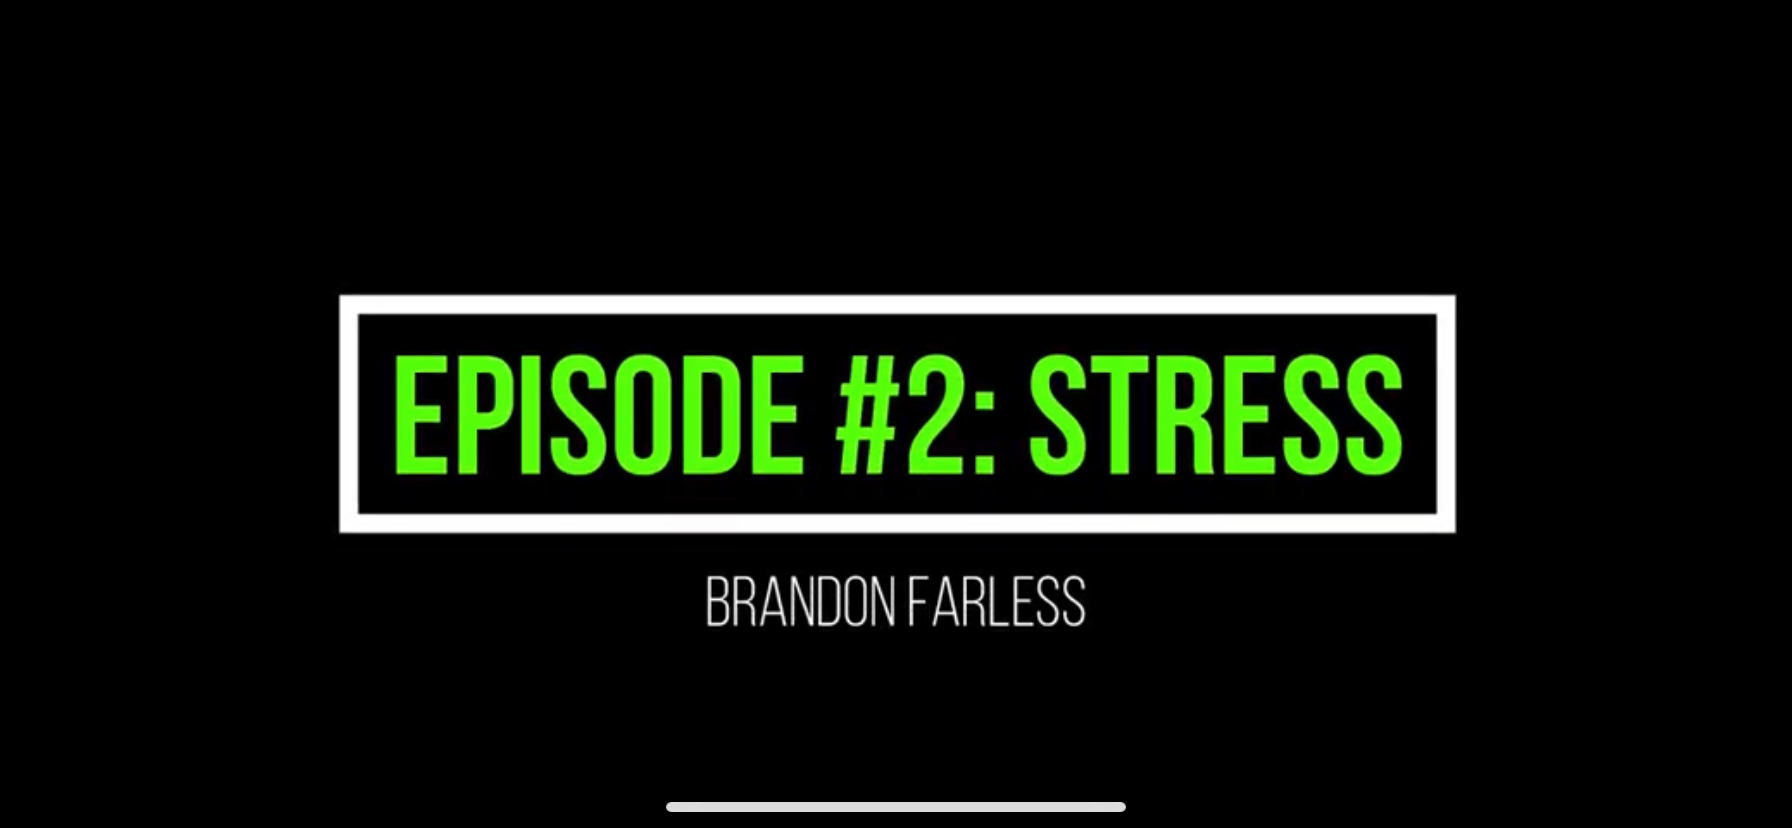 Episode #2: Stress